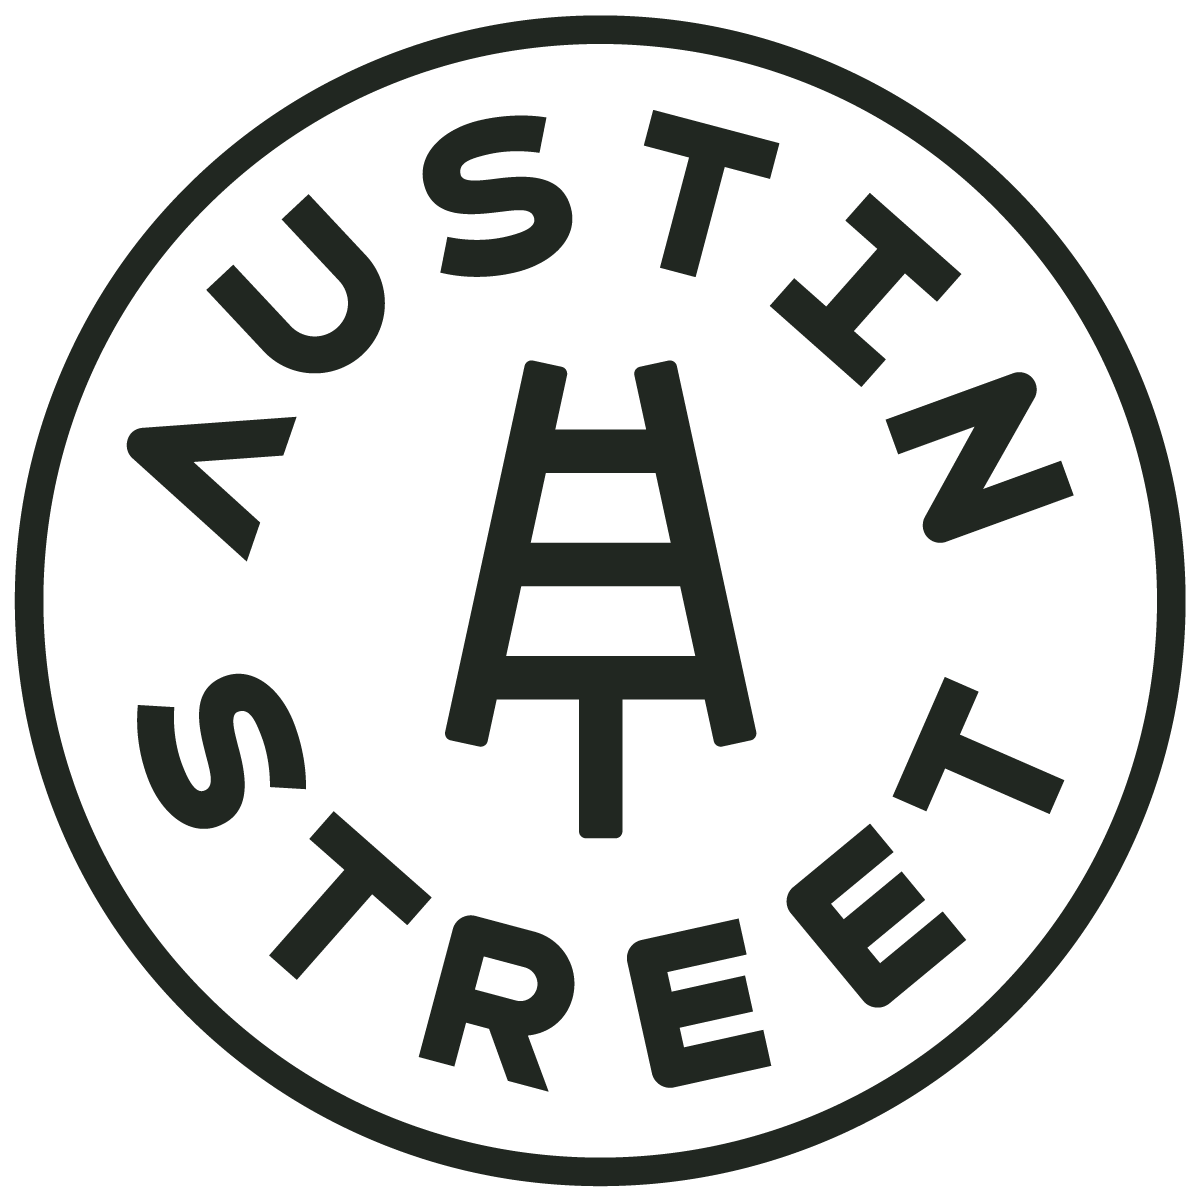 Austin Street Brewery (Fox St.)